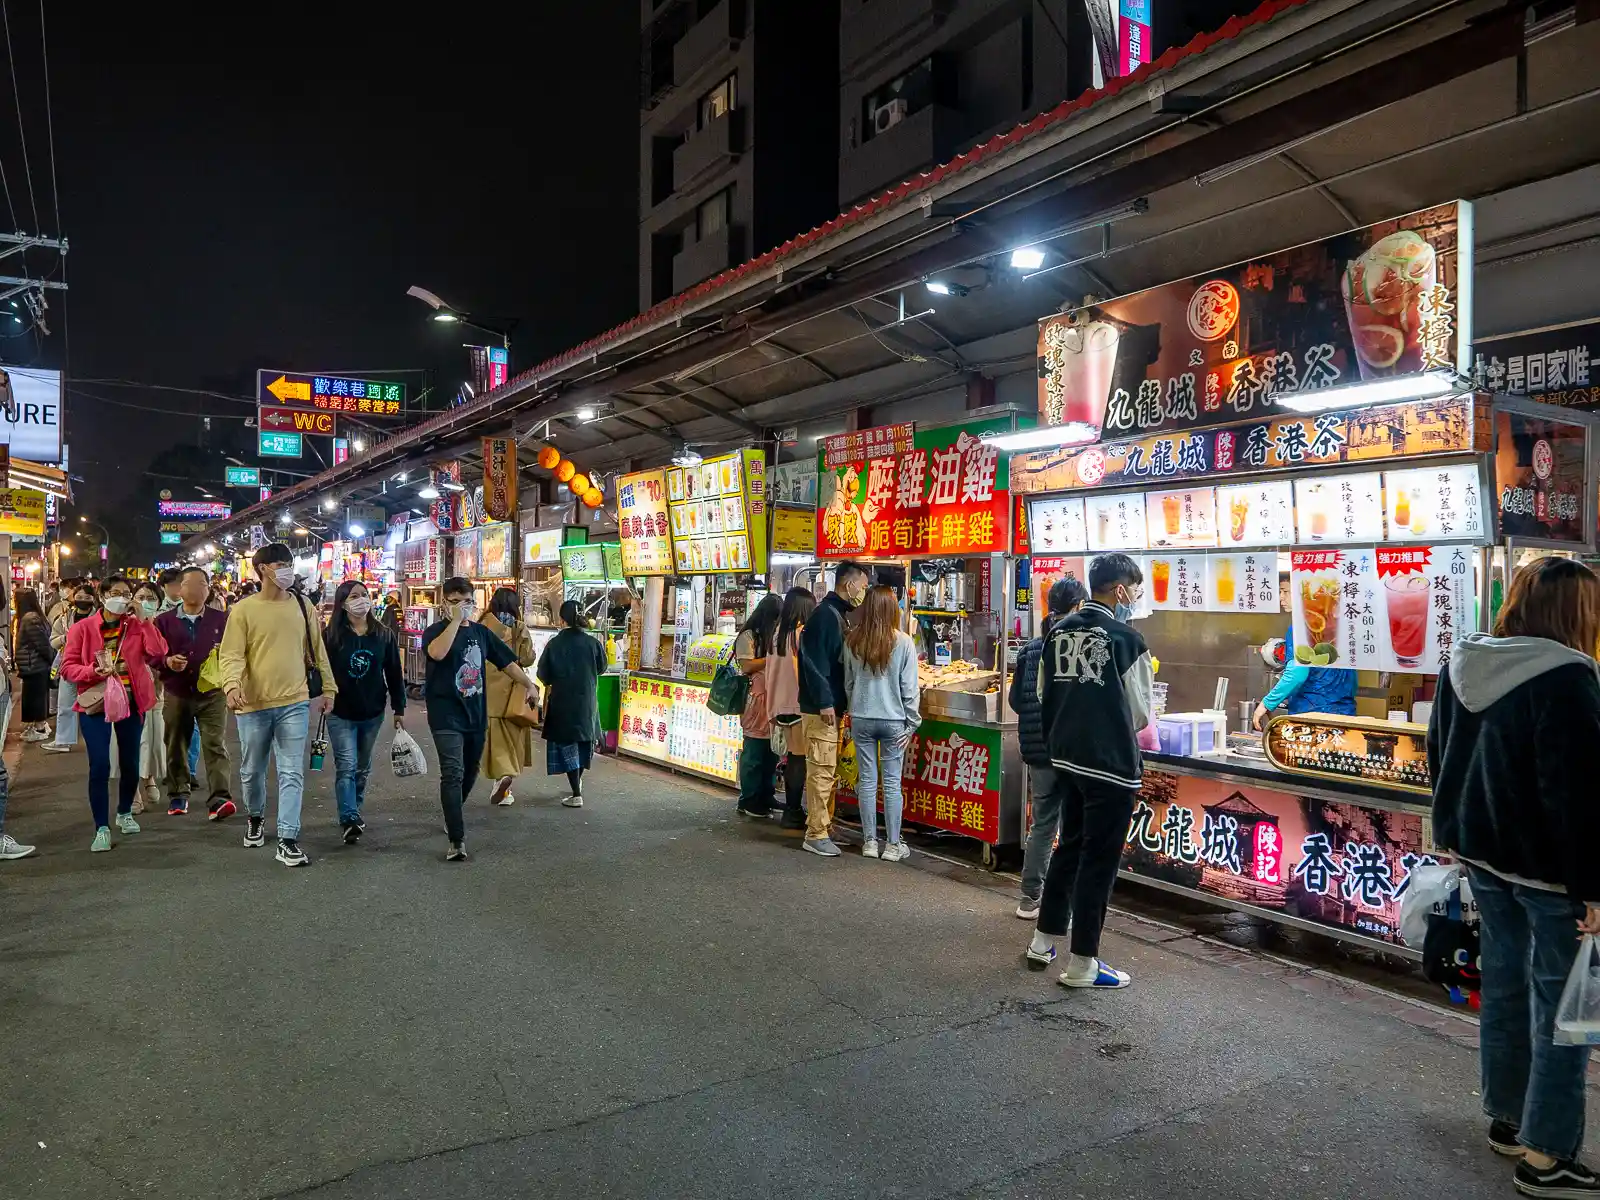 A crowded night market street in Taiwan.